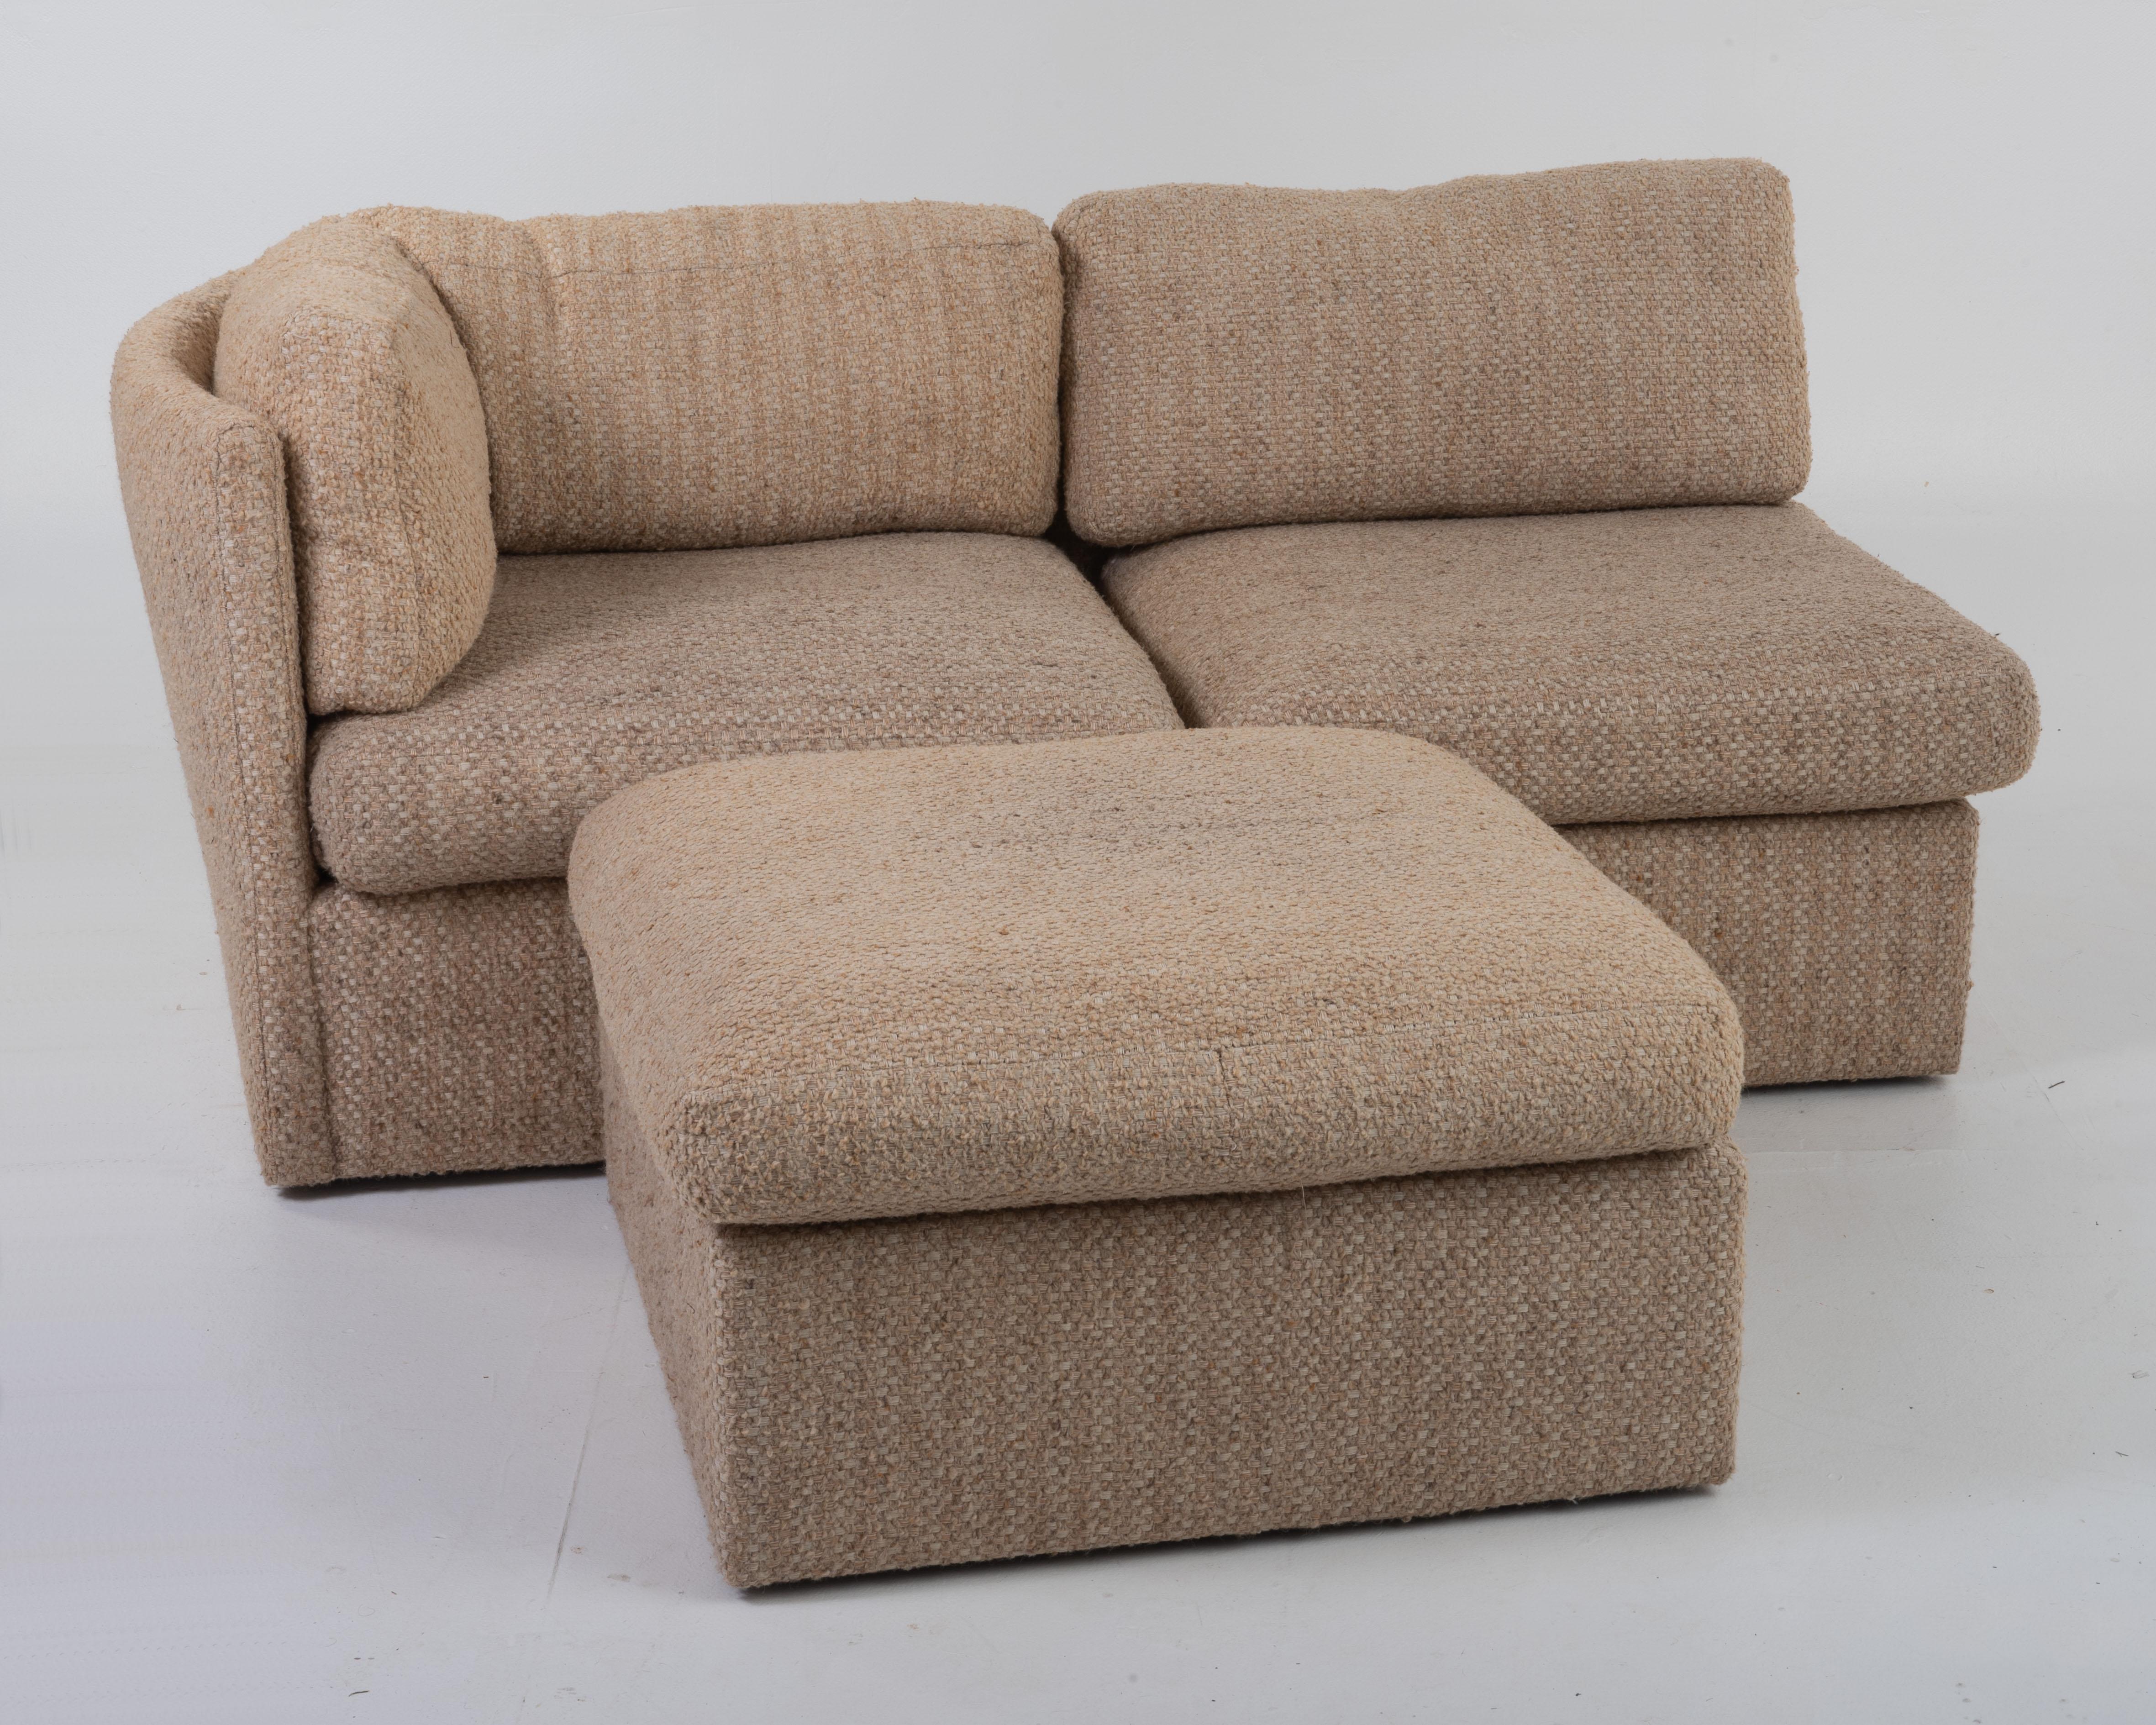 North American Milo Baughman for Thayer Coggin 10 Piece Curved Modular Sectional Sofa